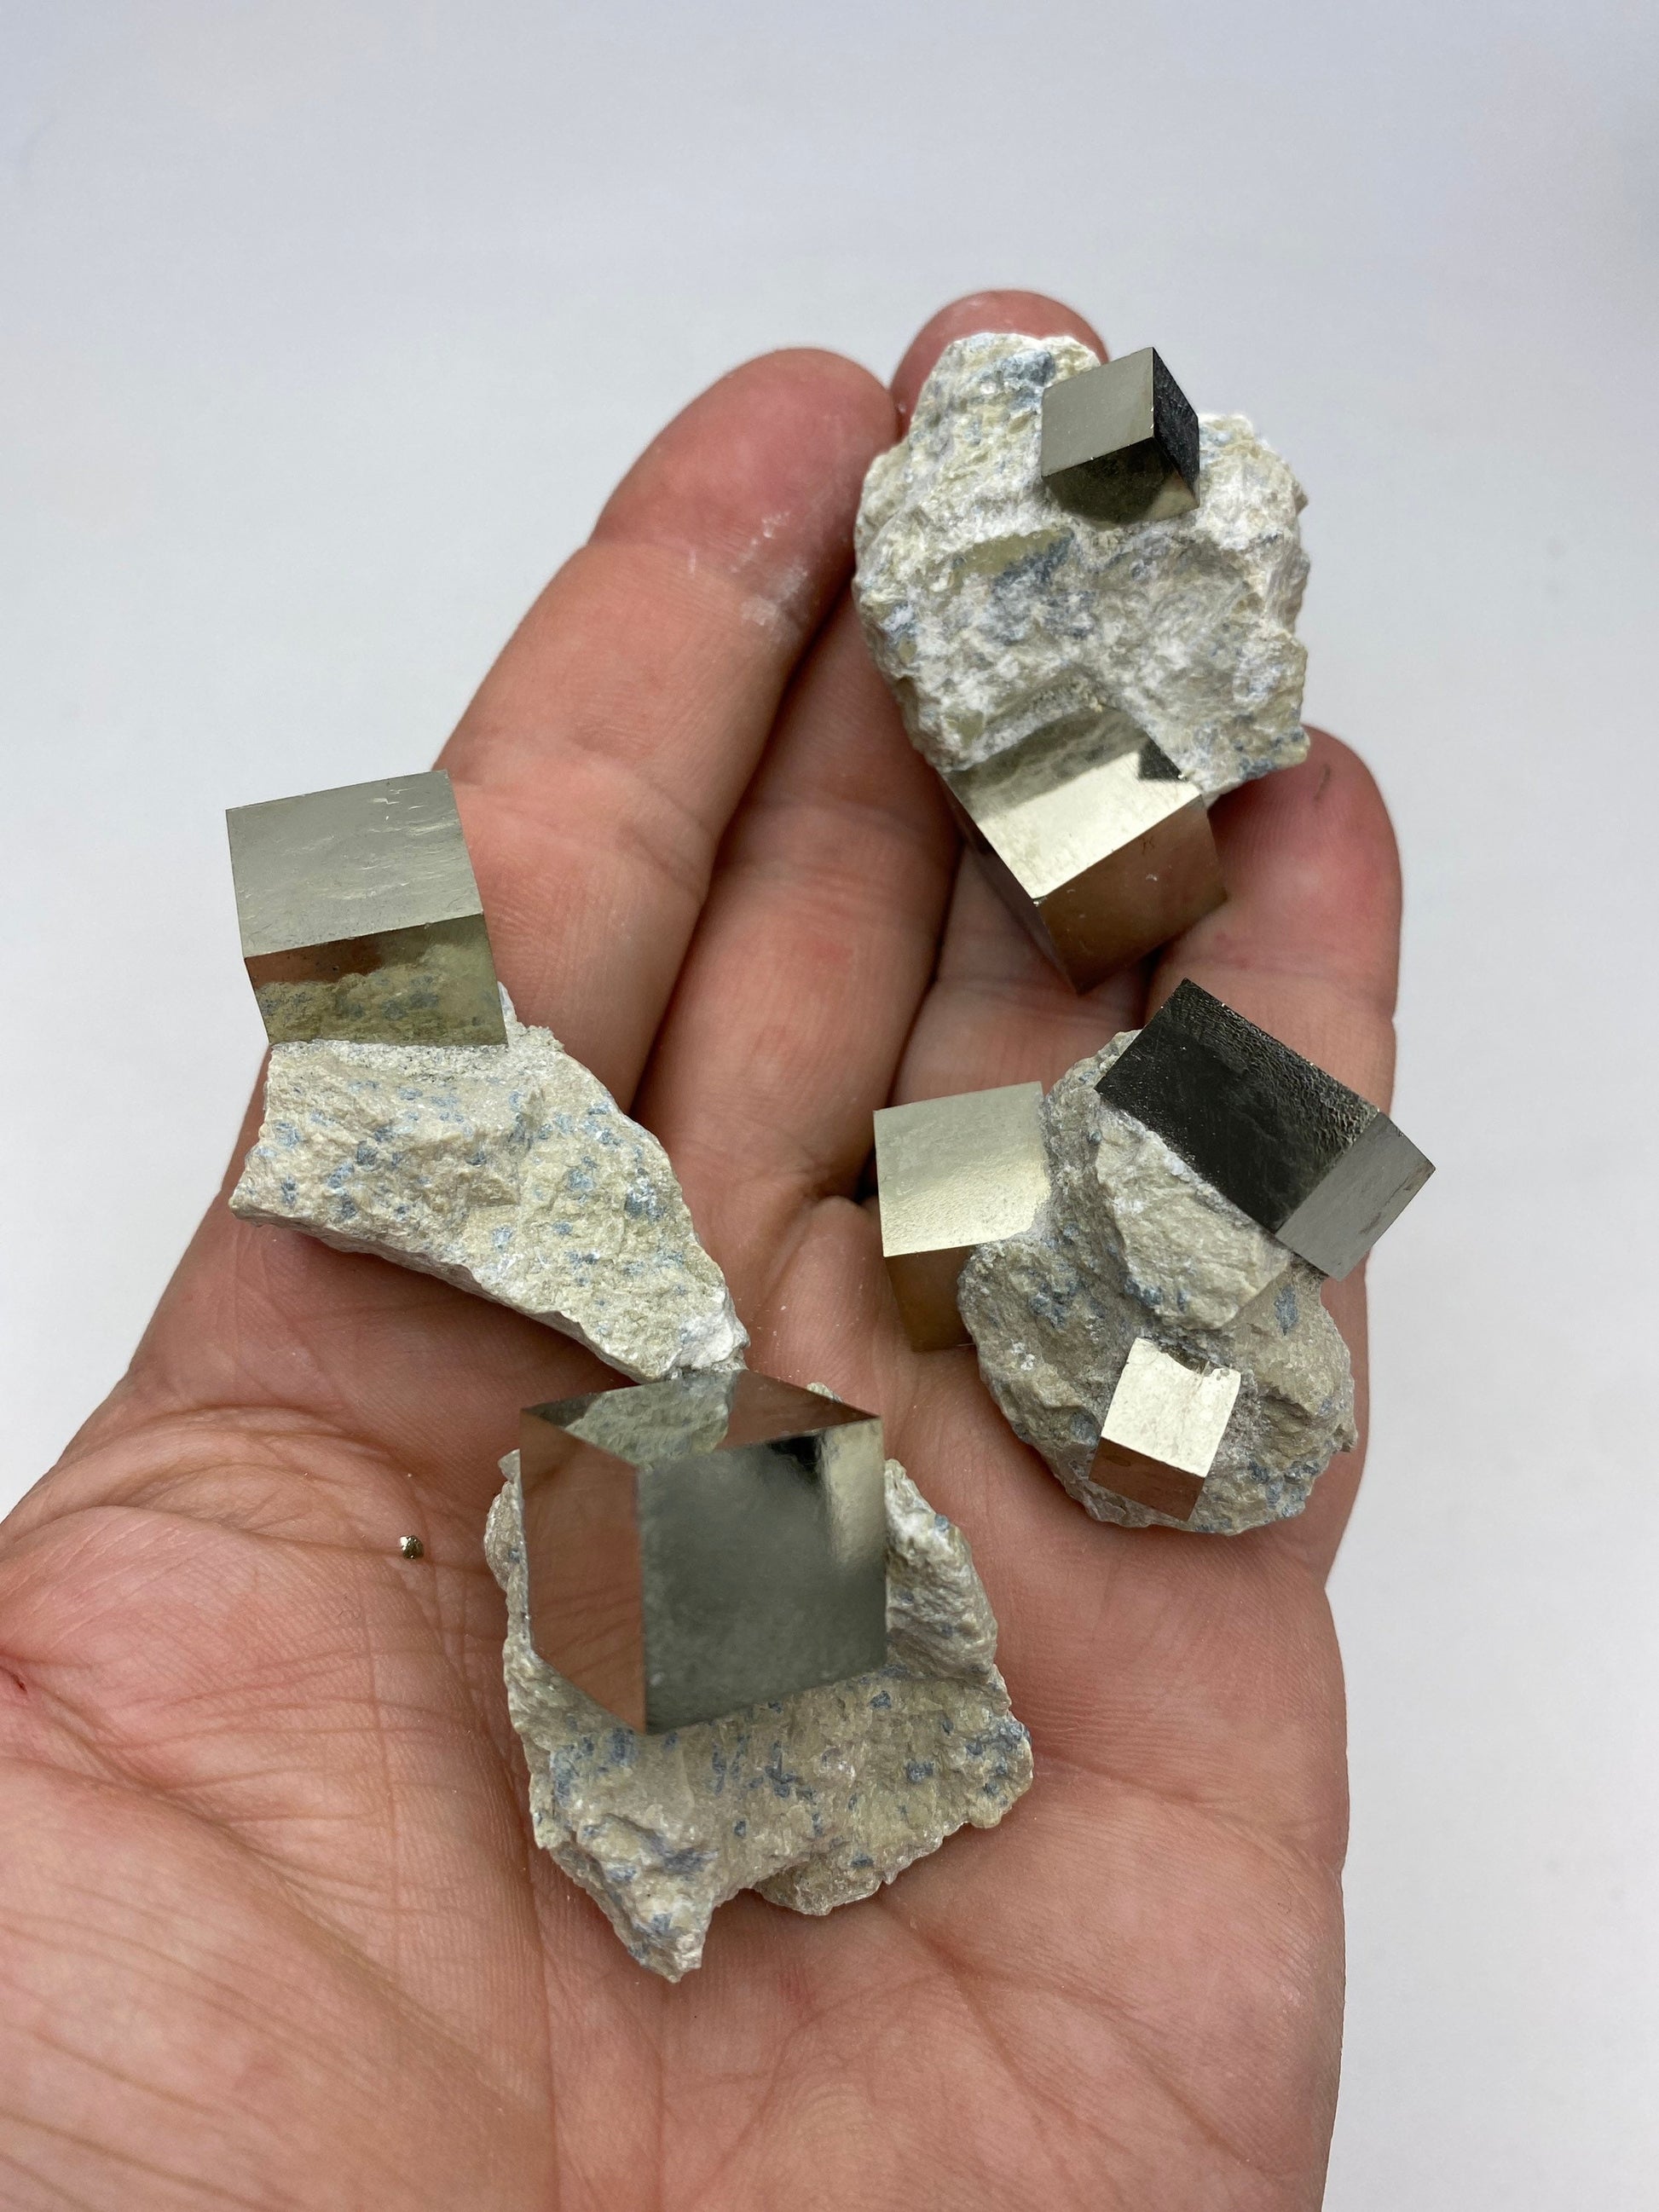 Small Pyrite cube crystals in Matrix from Navajun Spain